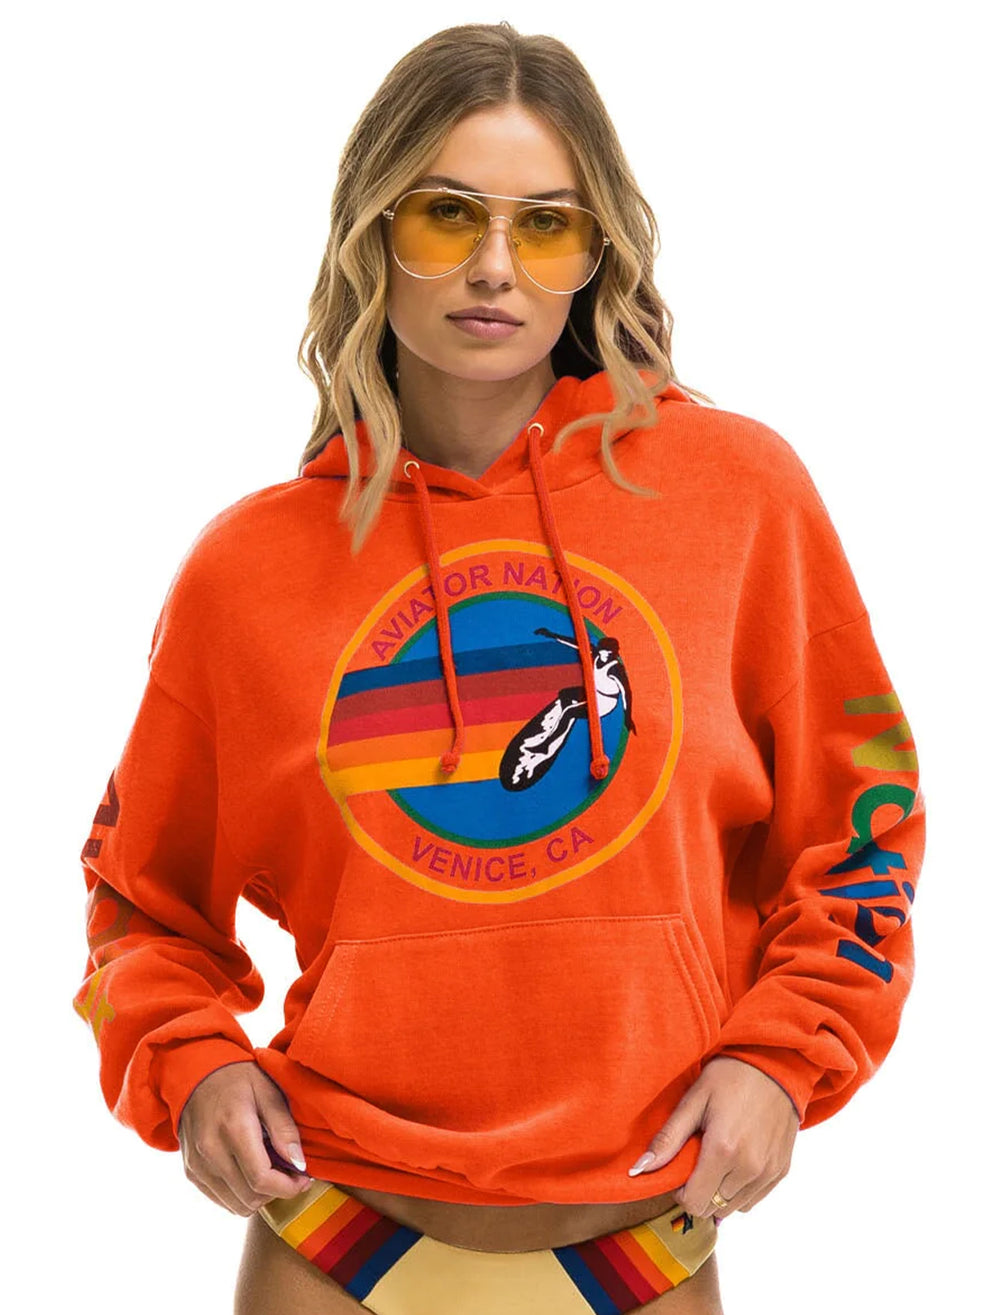 Model wearing Aviator Nation's aviator nation pullover hoodie in orange.